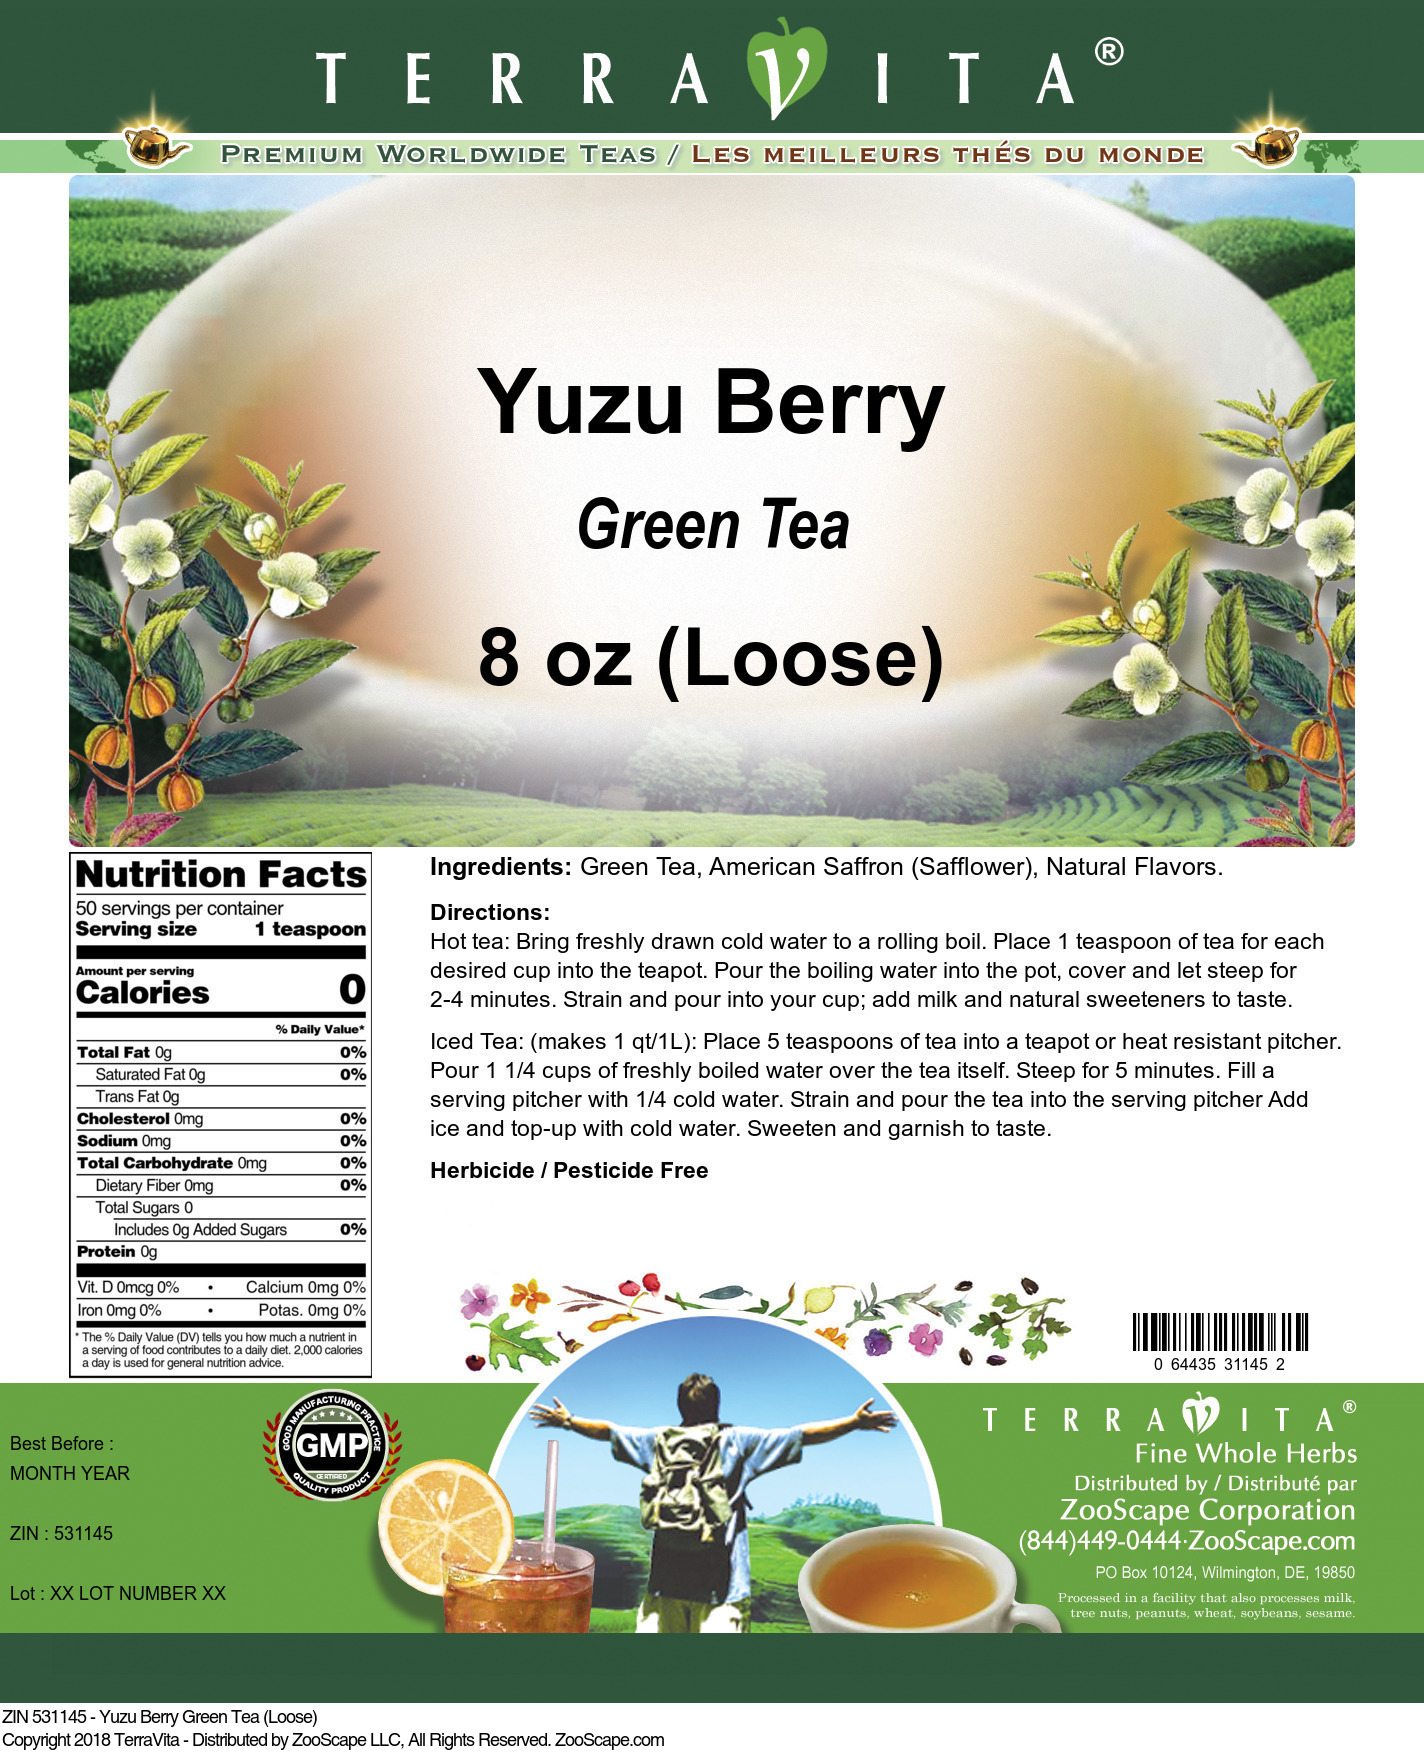 Yuzu Berry Green Tea (Loose) - Label